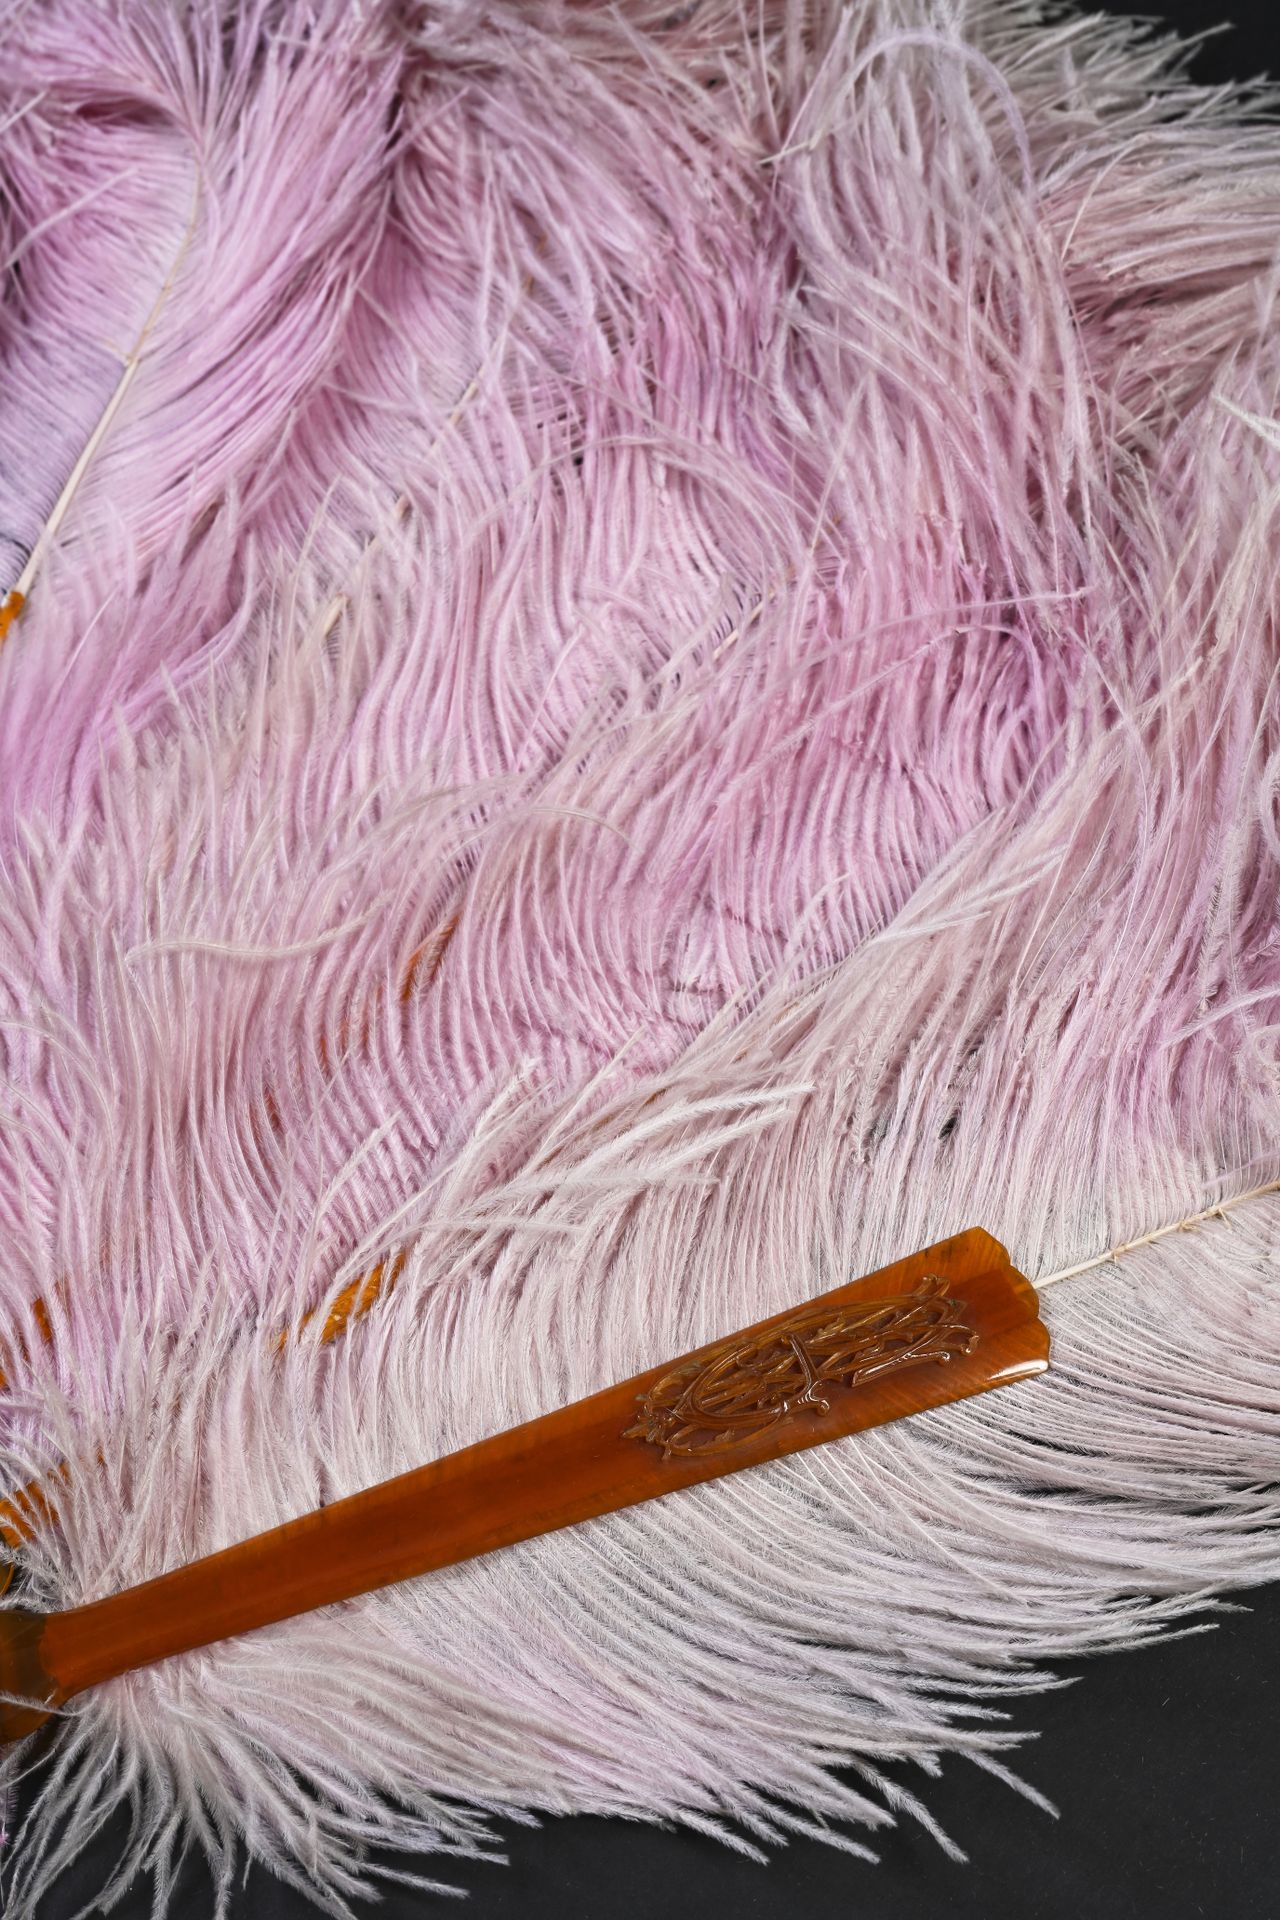 Null 粉红色的羽毛，欧洲，约1920年
鸵鸟羽毛扇，粉红色的色调，称为半珍珠色（变色）。
金色的玳瑁壳框架。羽毛上有压印号码，背面刻有制扇者的名字 "Ges&hellip;